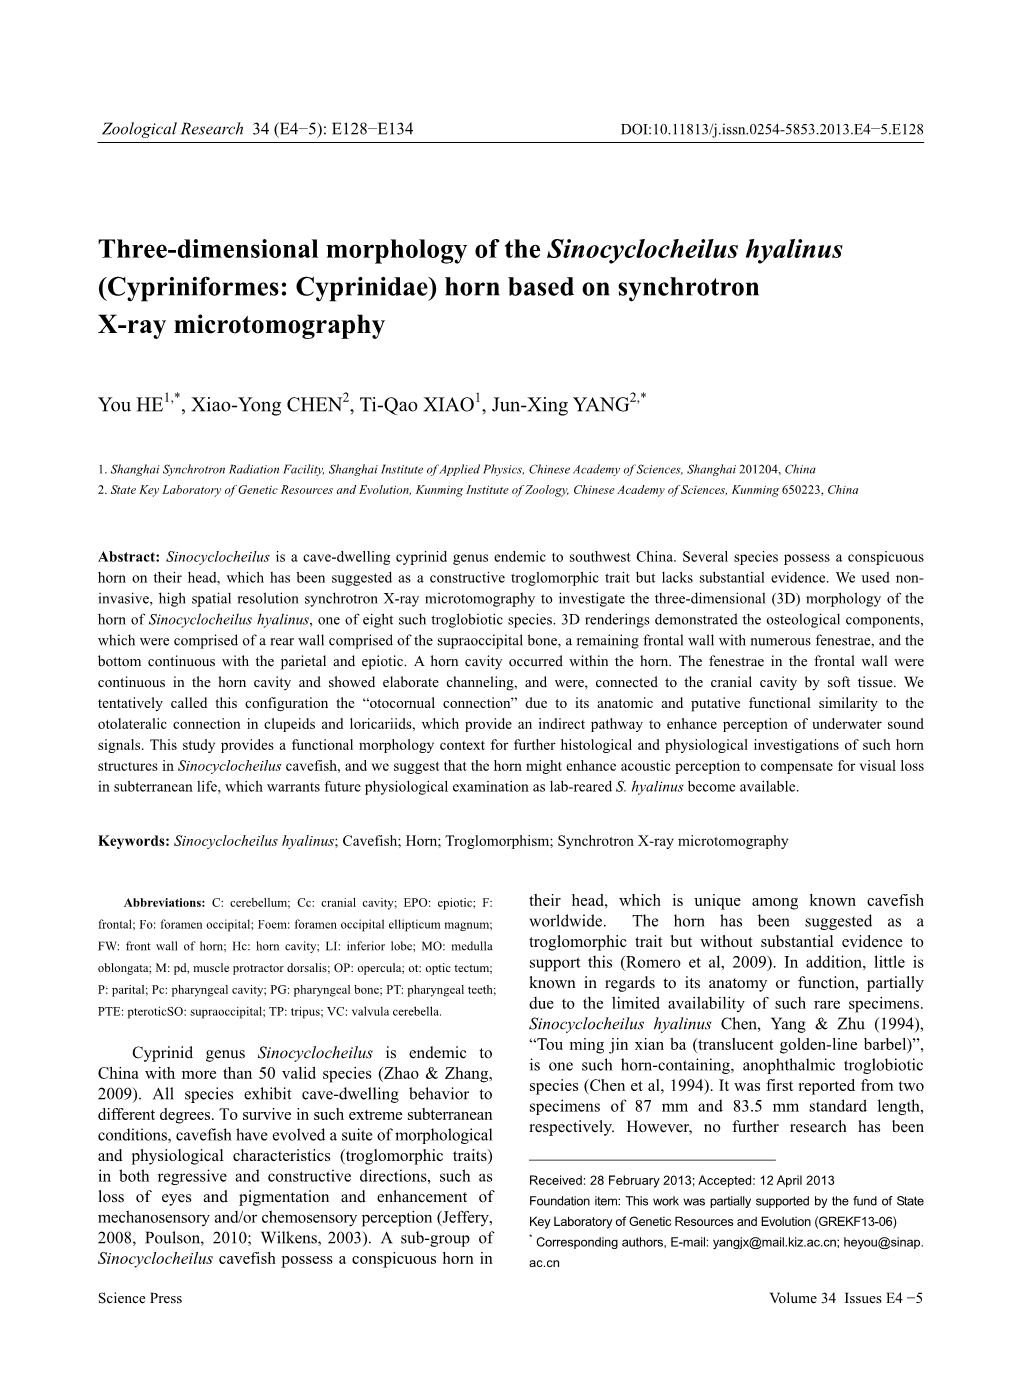 Three-Dimensional Morphology of the Sinocyclocheilus Hyalinus (Cypriniformes: Cyprinidae) Horn Based on Synchrotron X-Ray Microtomography